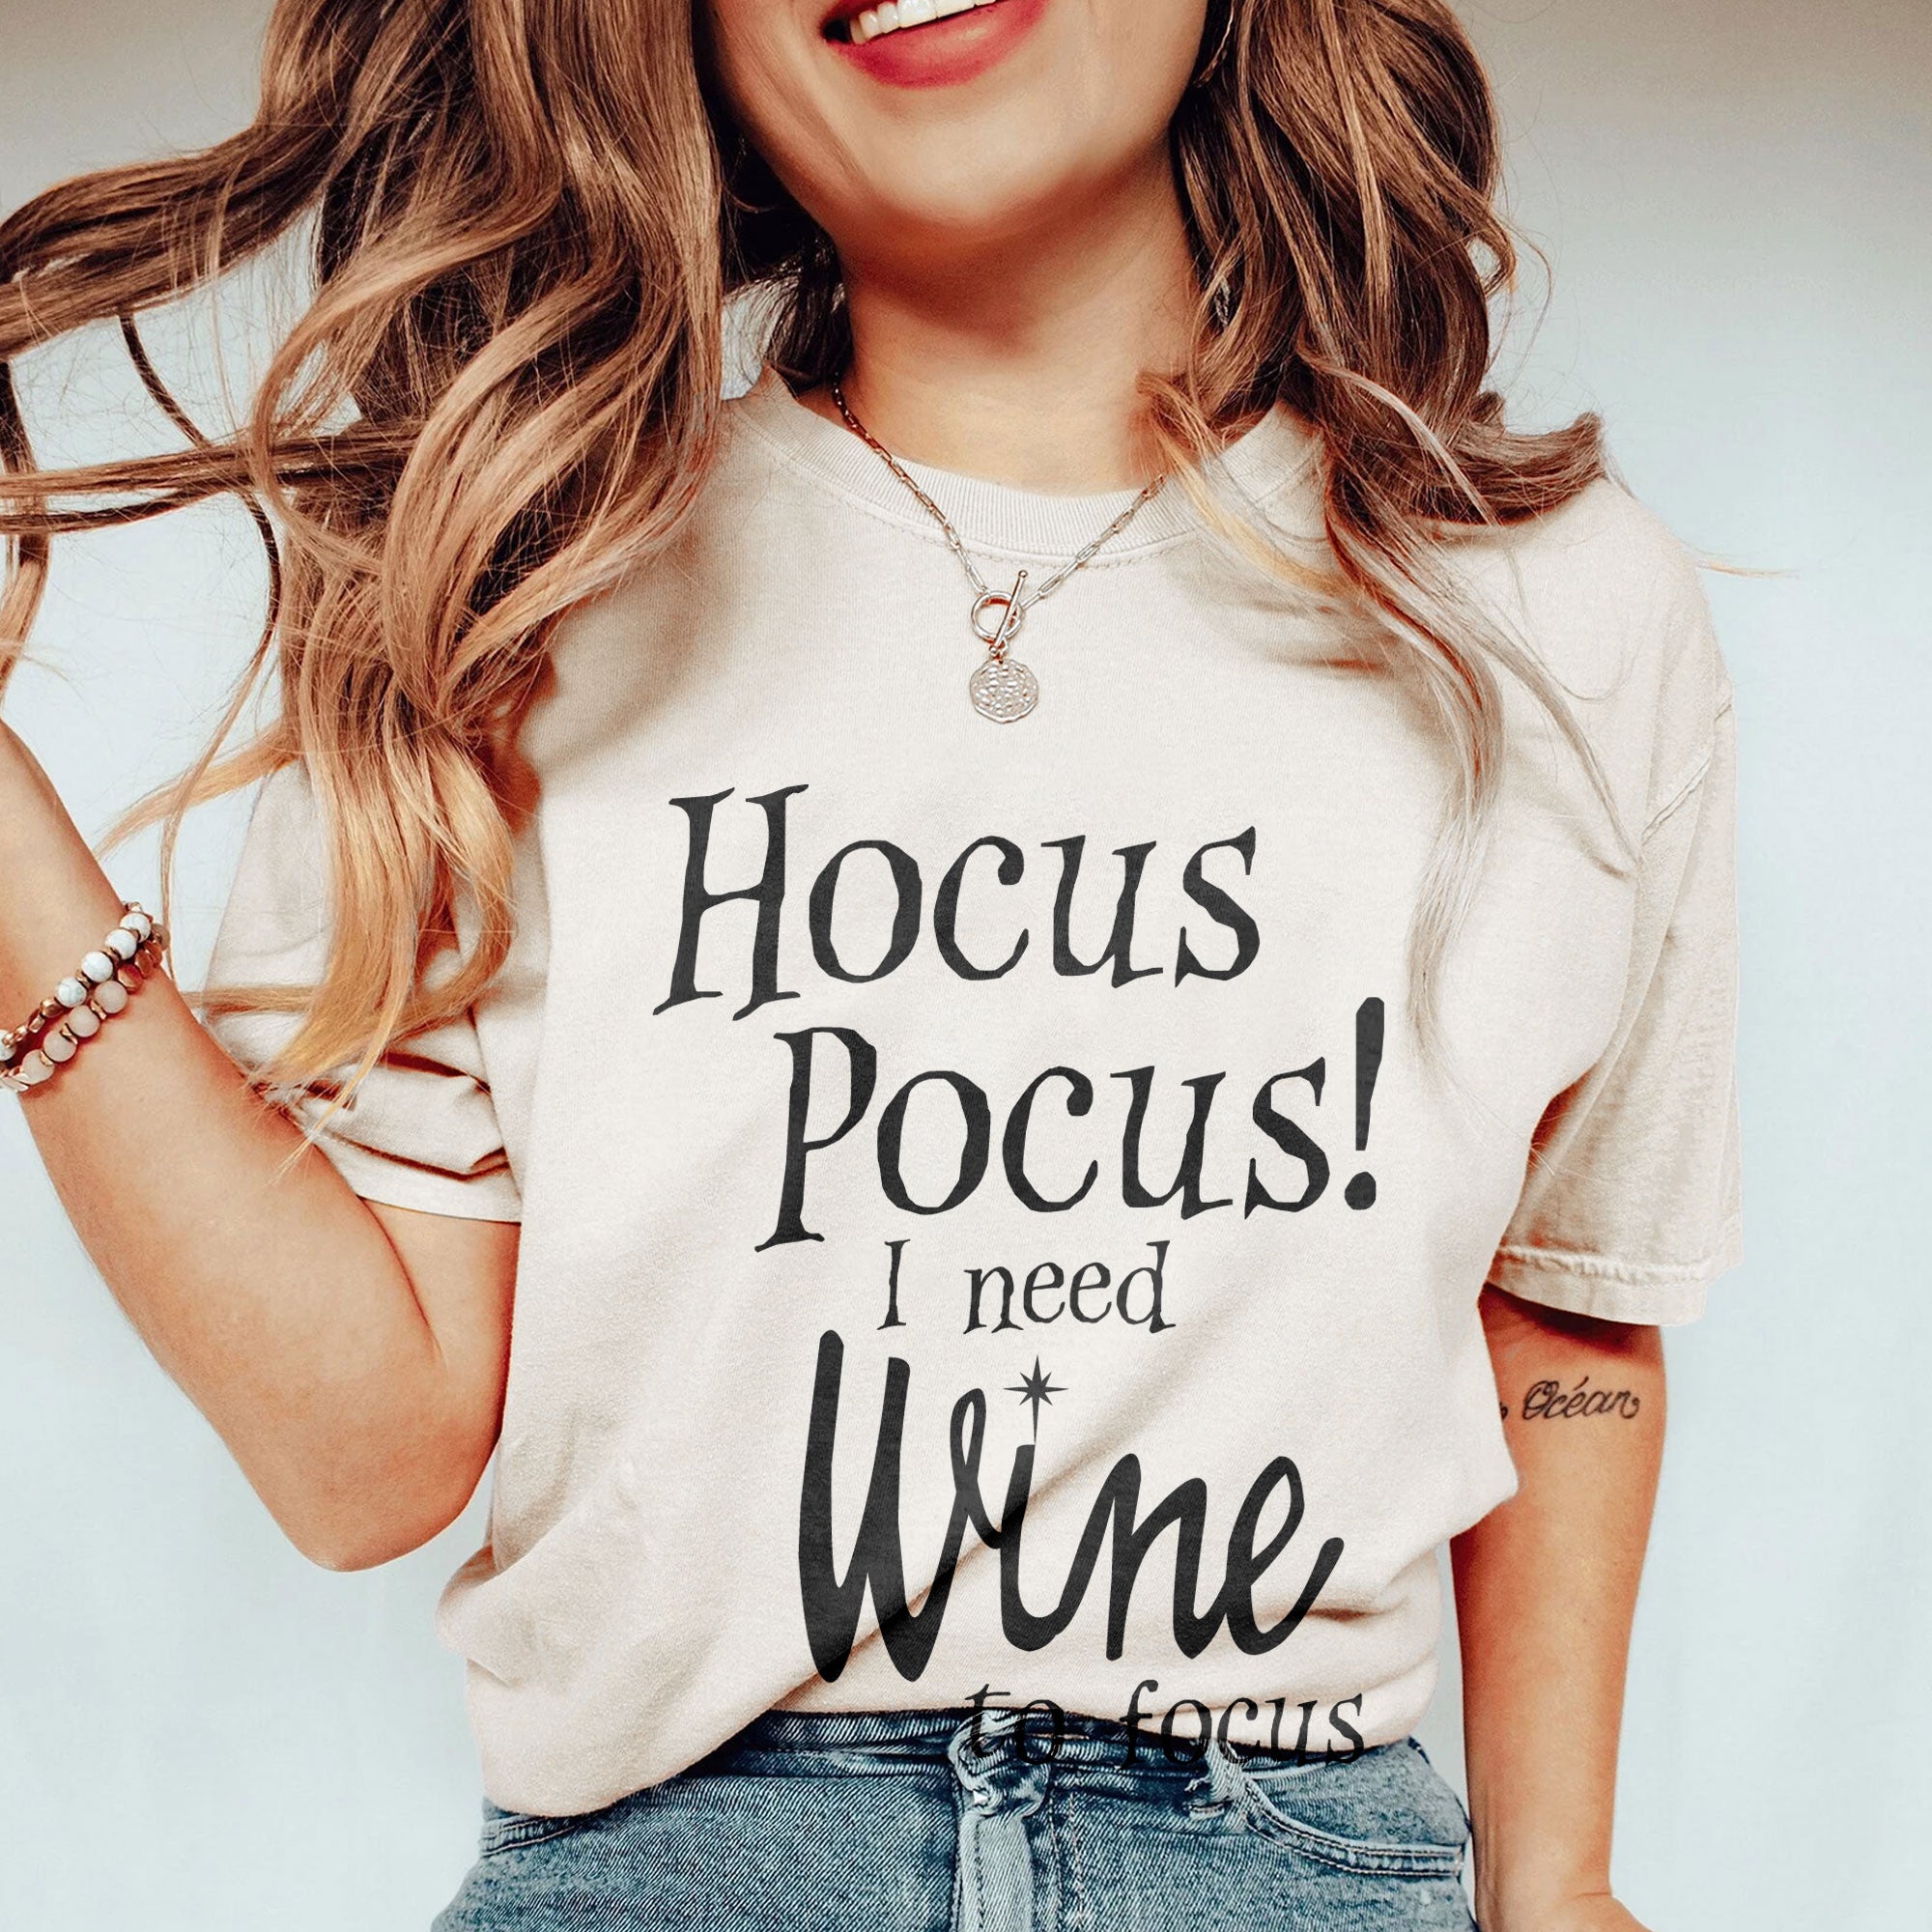 hocus pocus i need wine to focus oversized garment dyed shirt